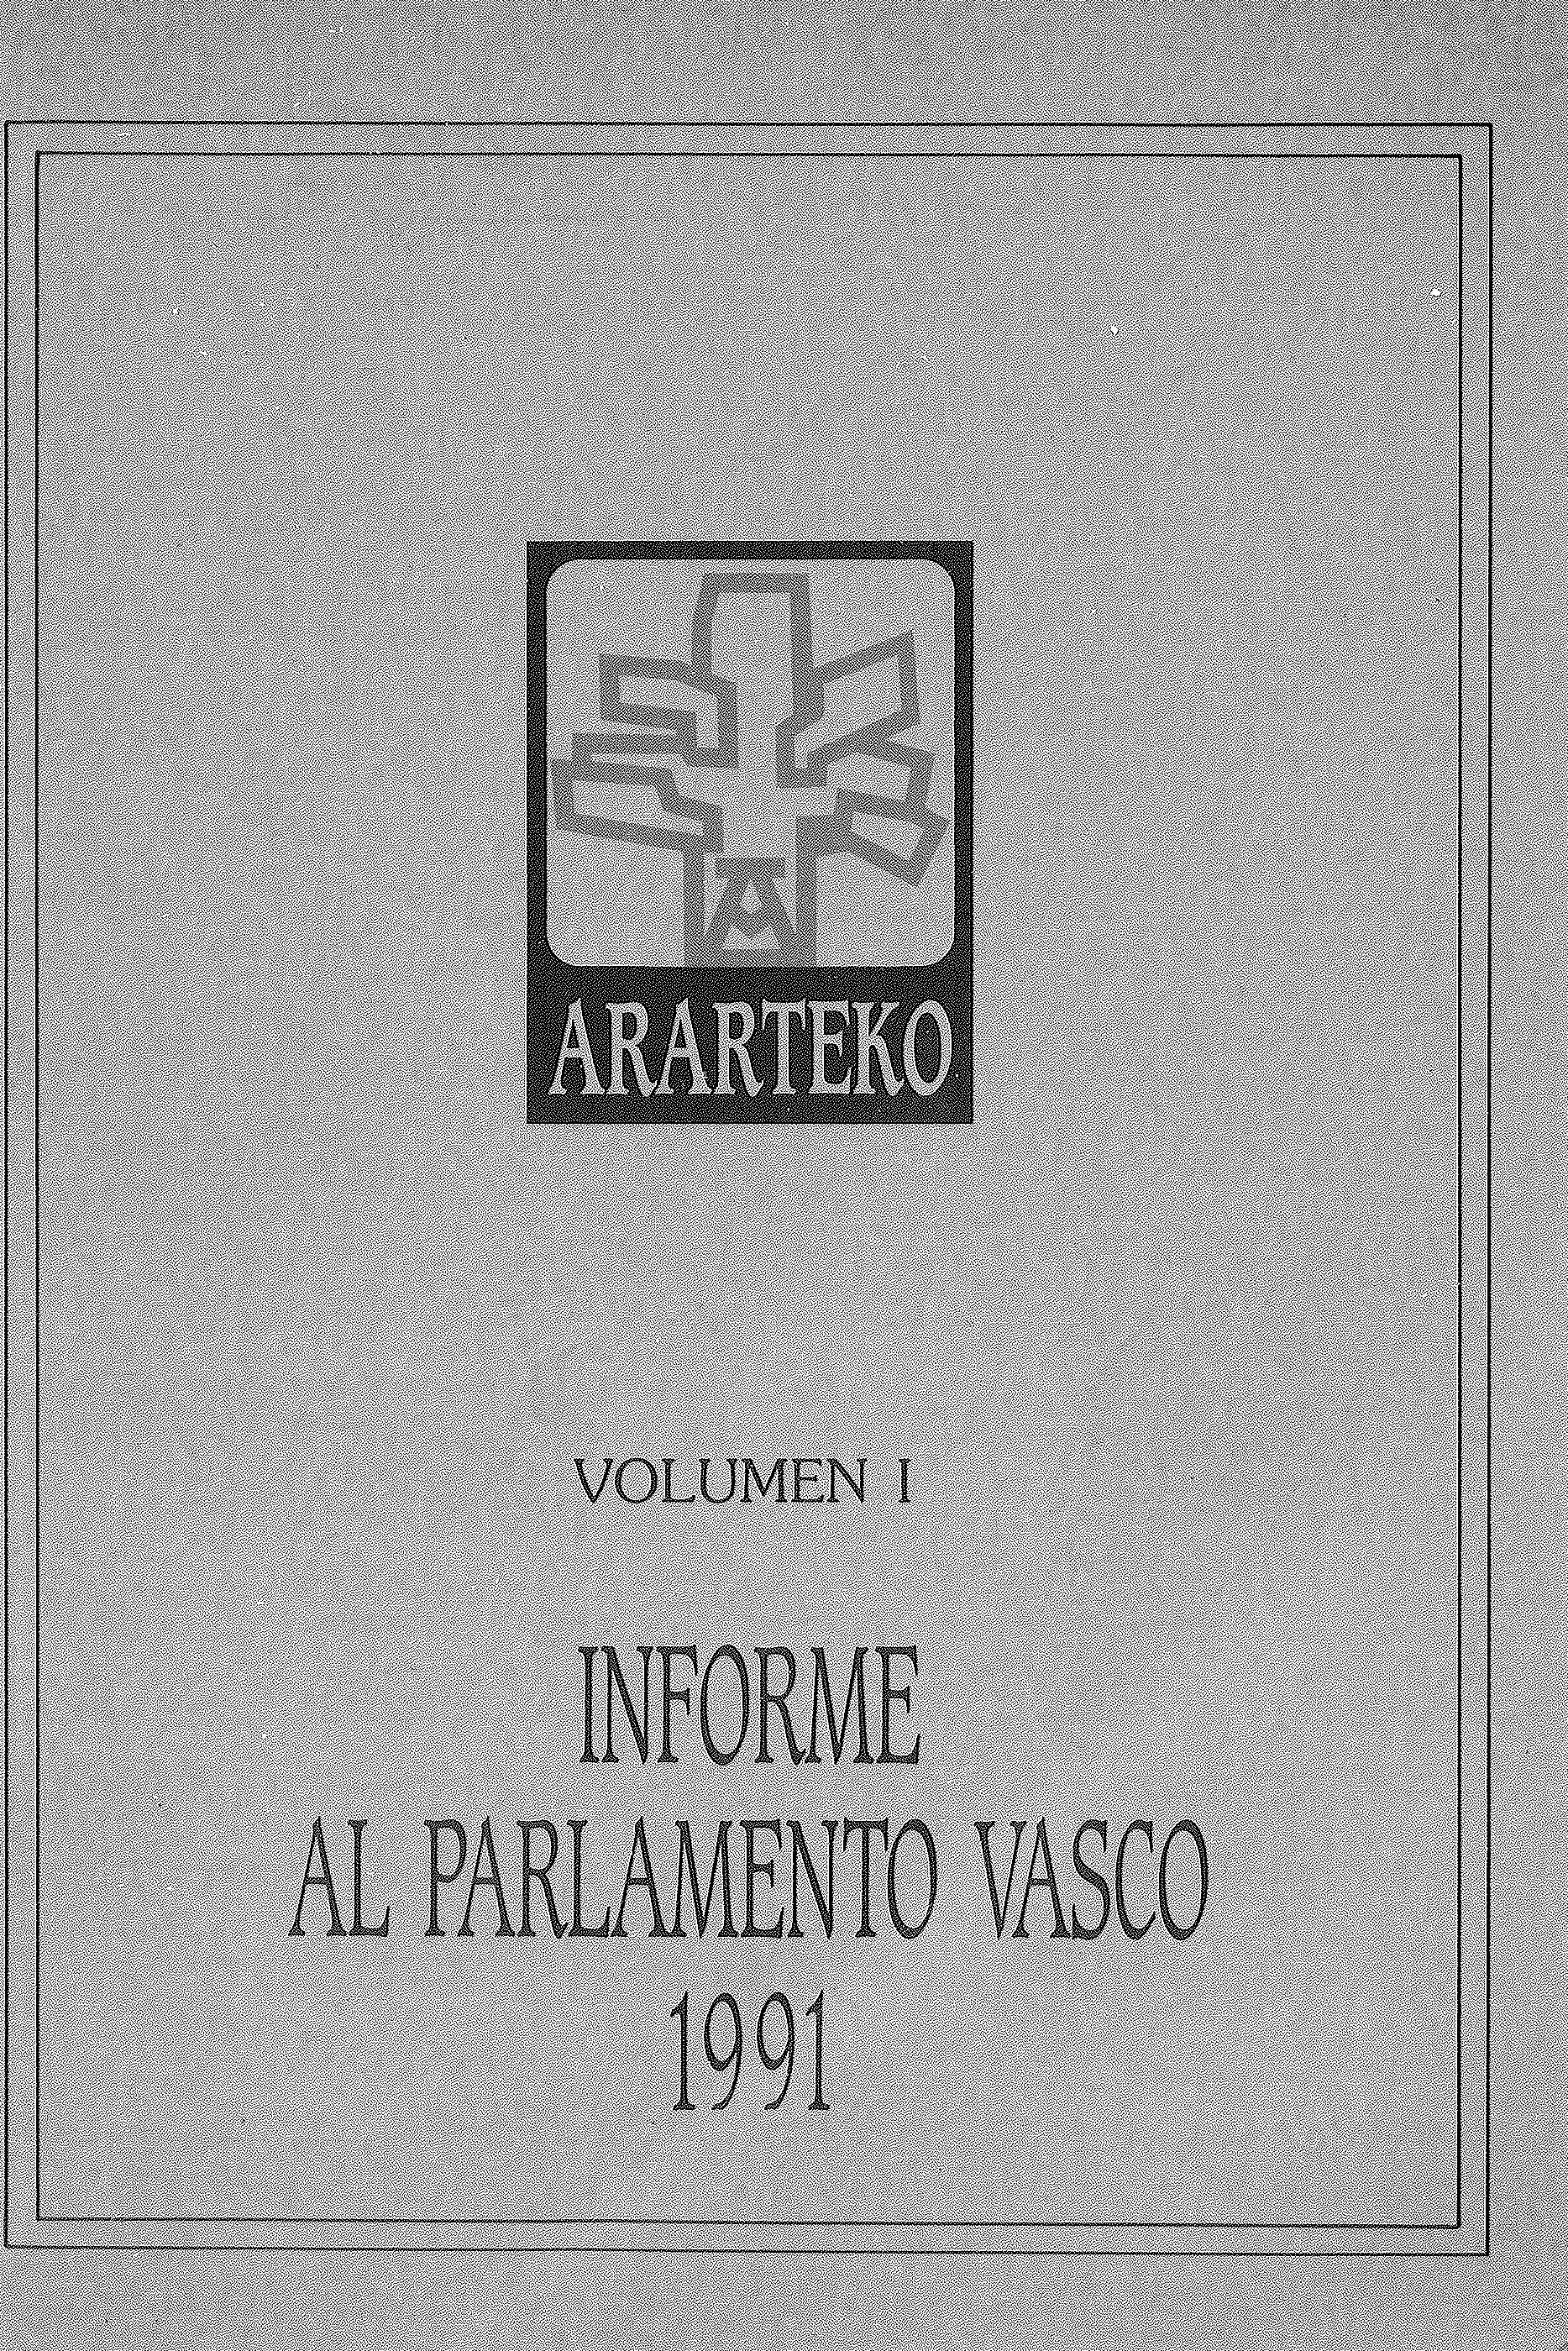 Informe del Ararteko al Parlamento Vasco año 1991